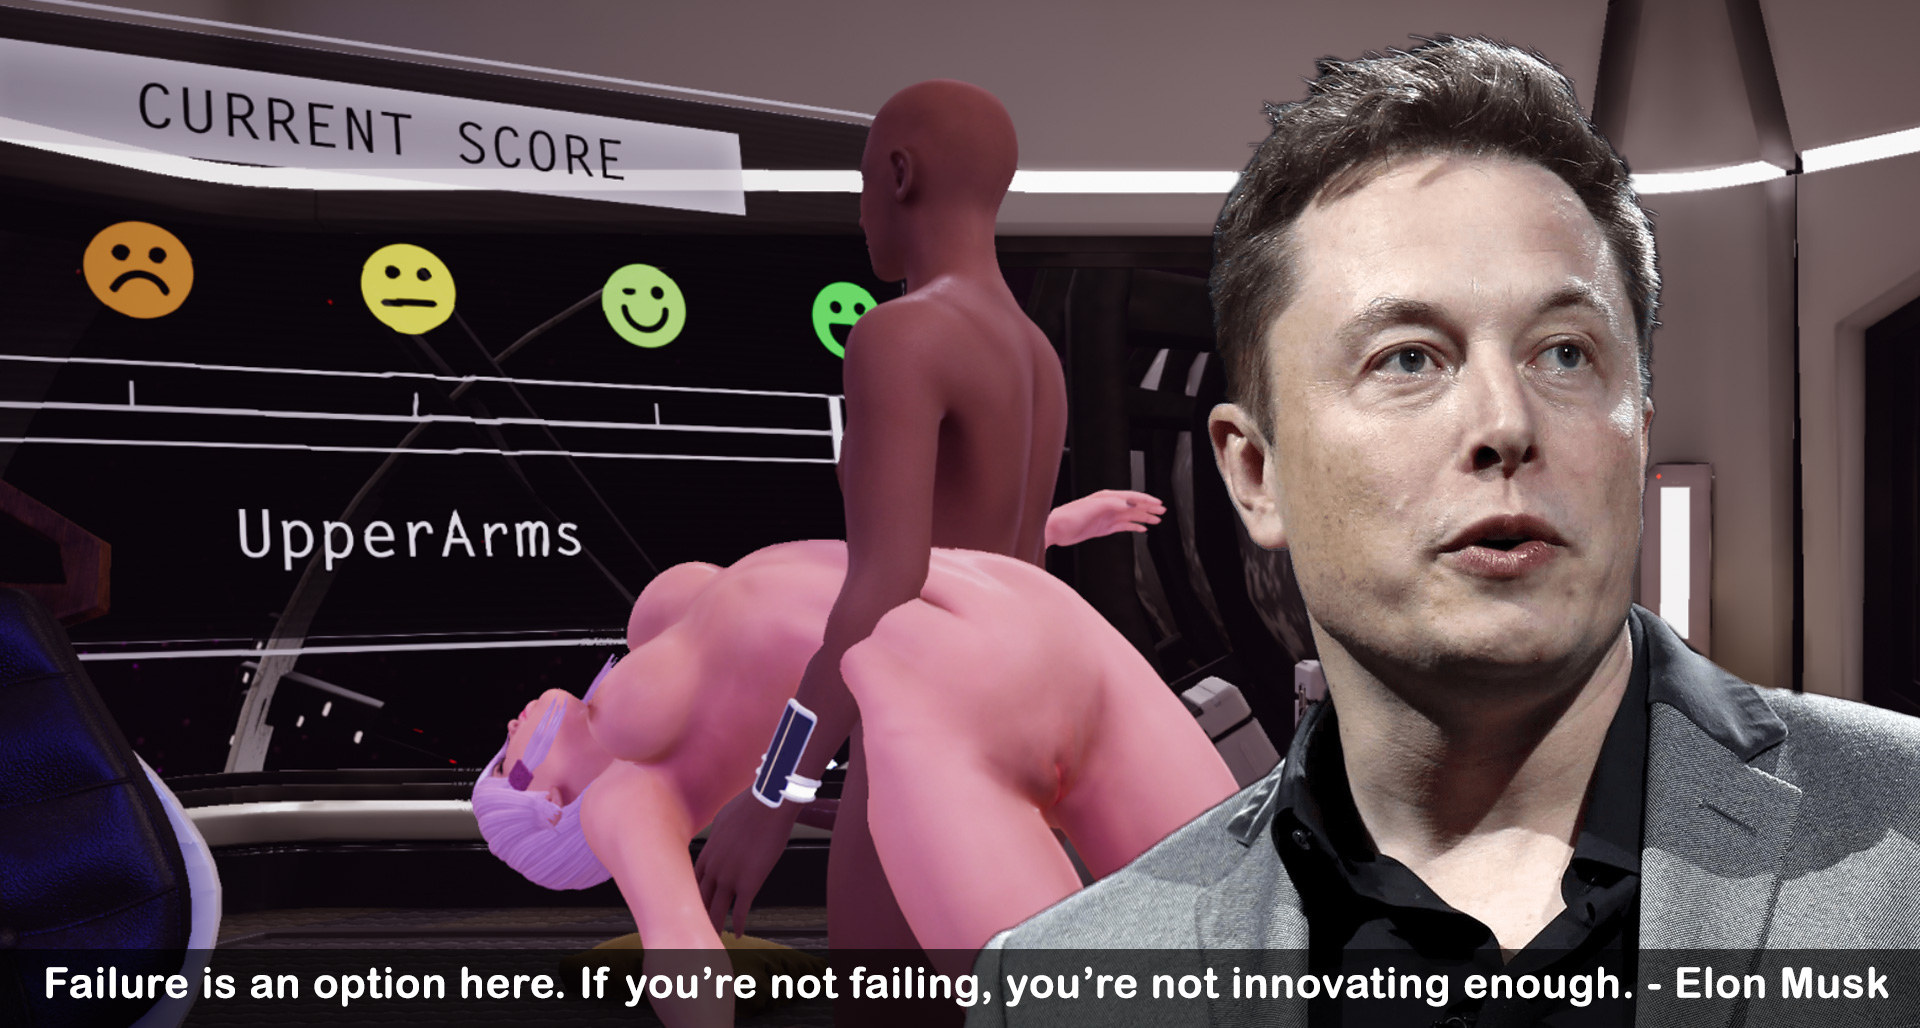 Elon musk nude photo gallery